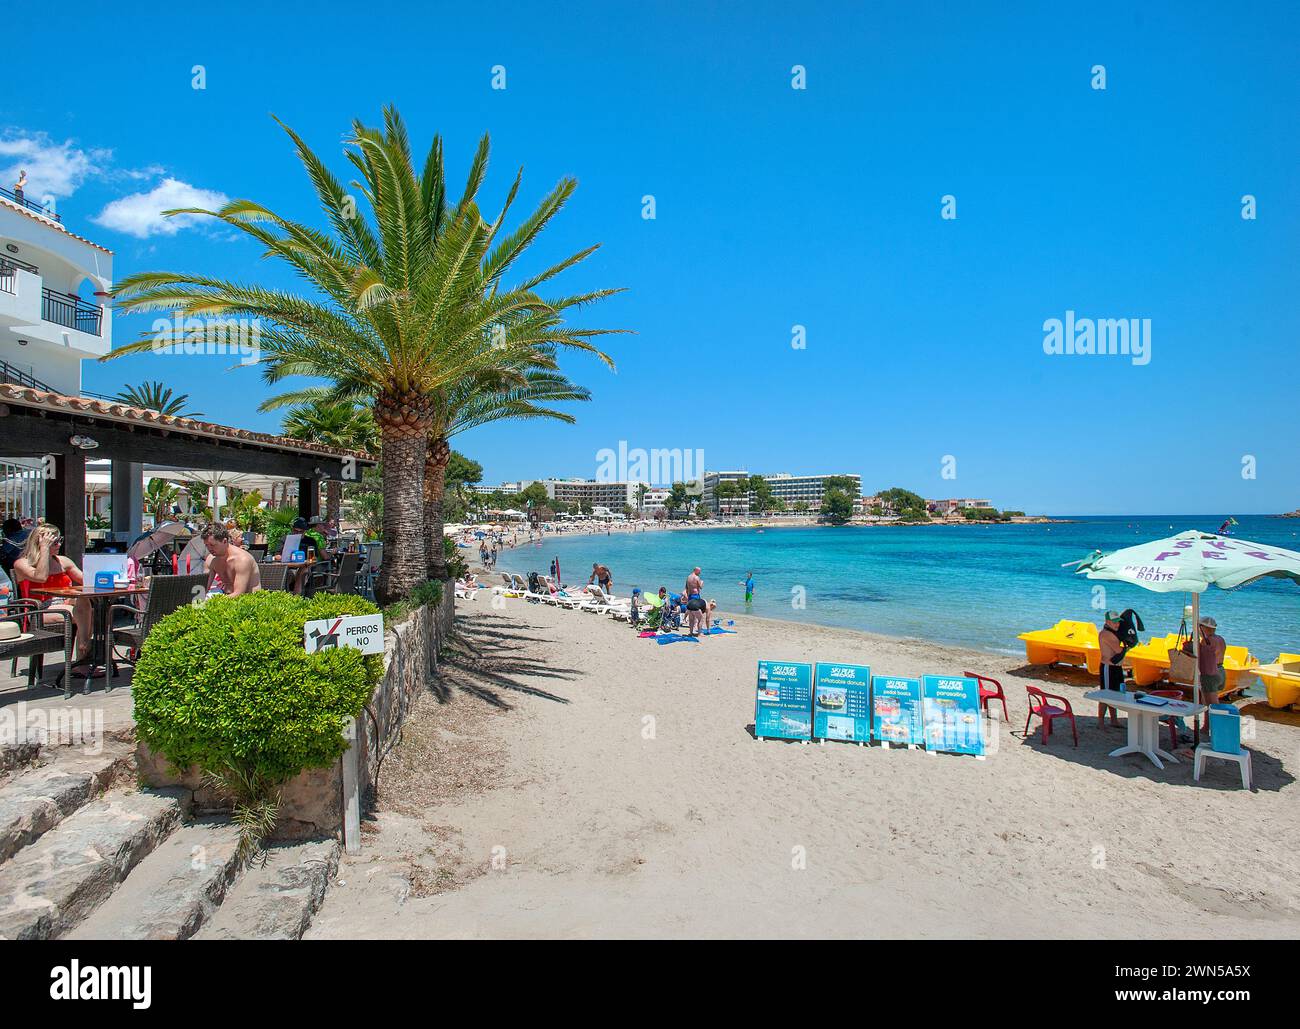 Cafe bar on beach, Es Cana, Ibiza, Balearics, Spain Stock Photo